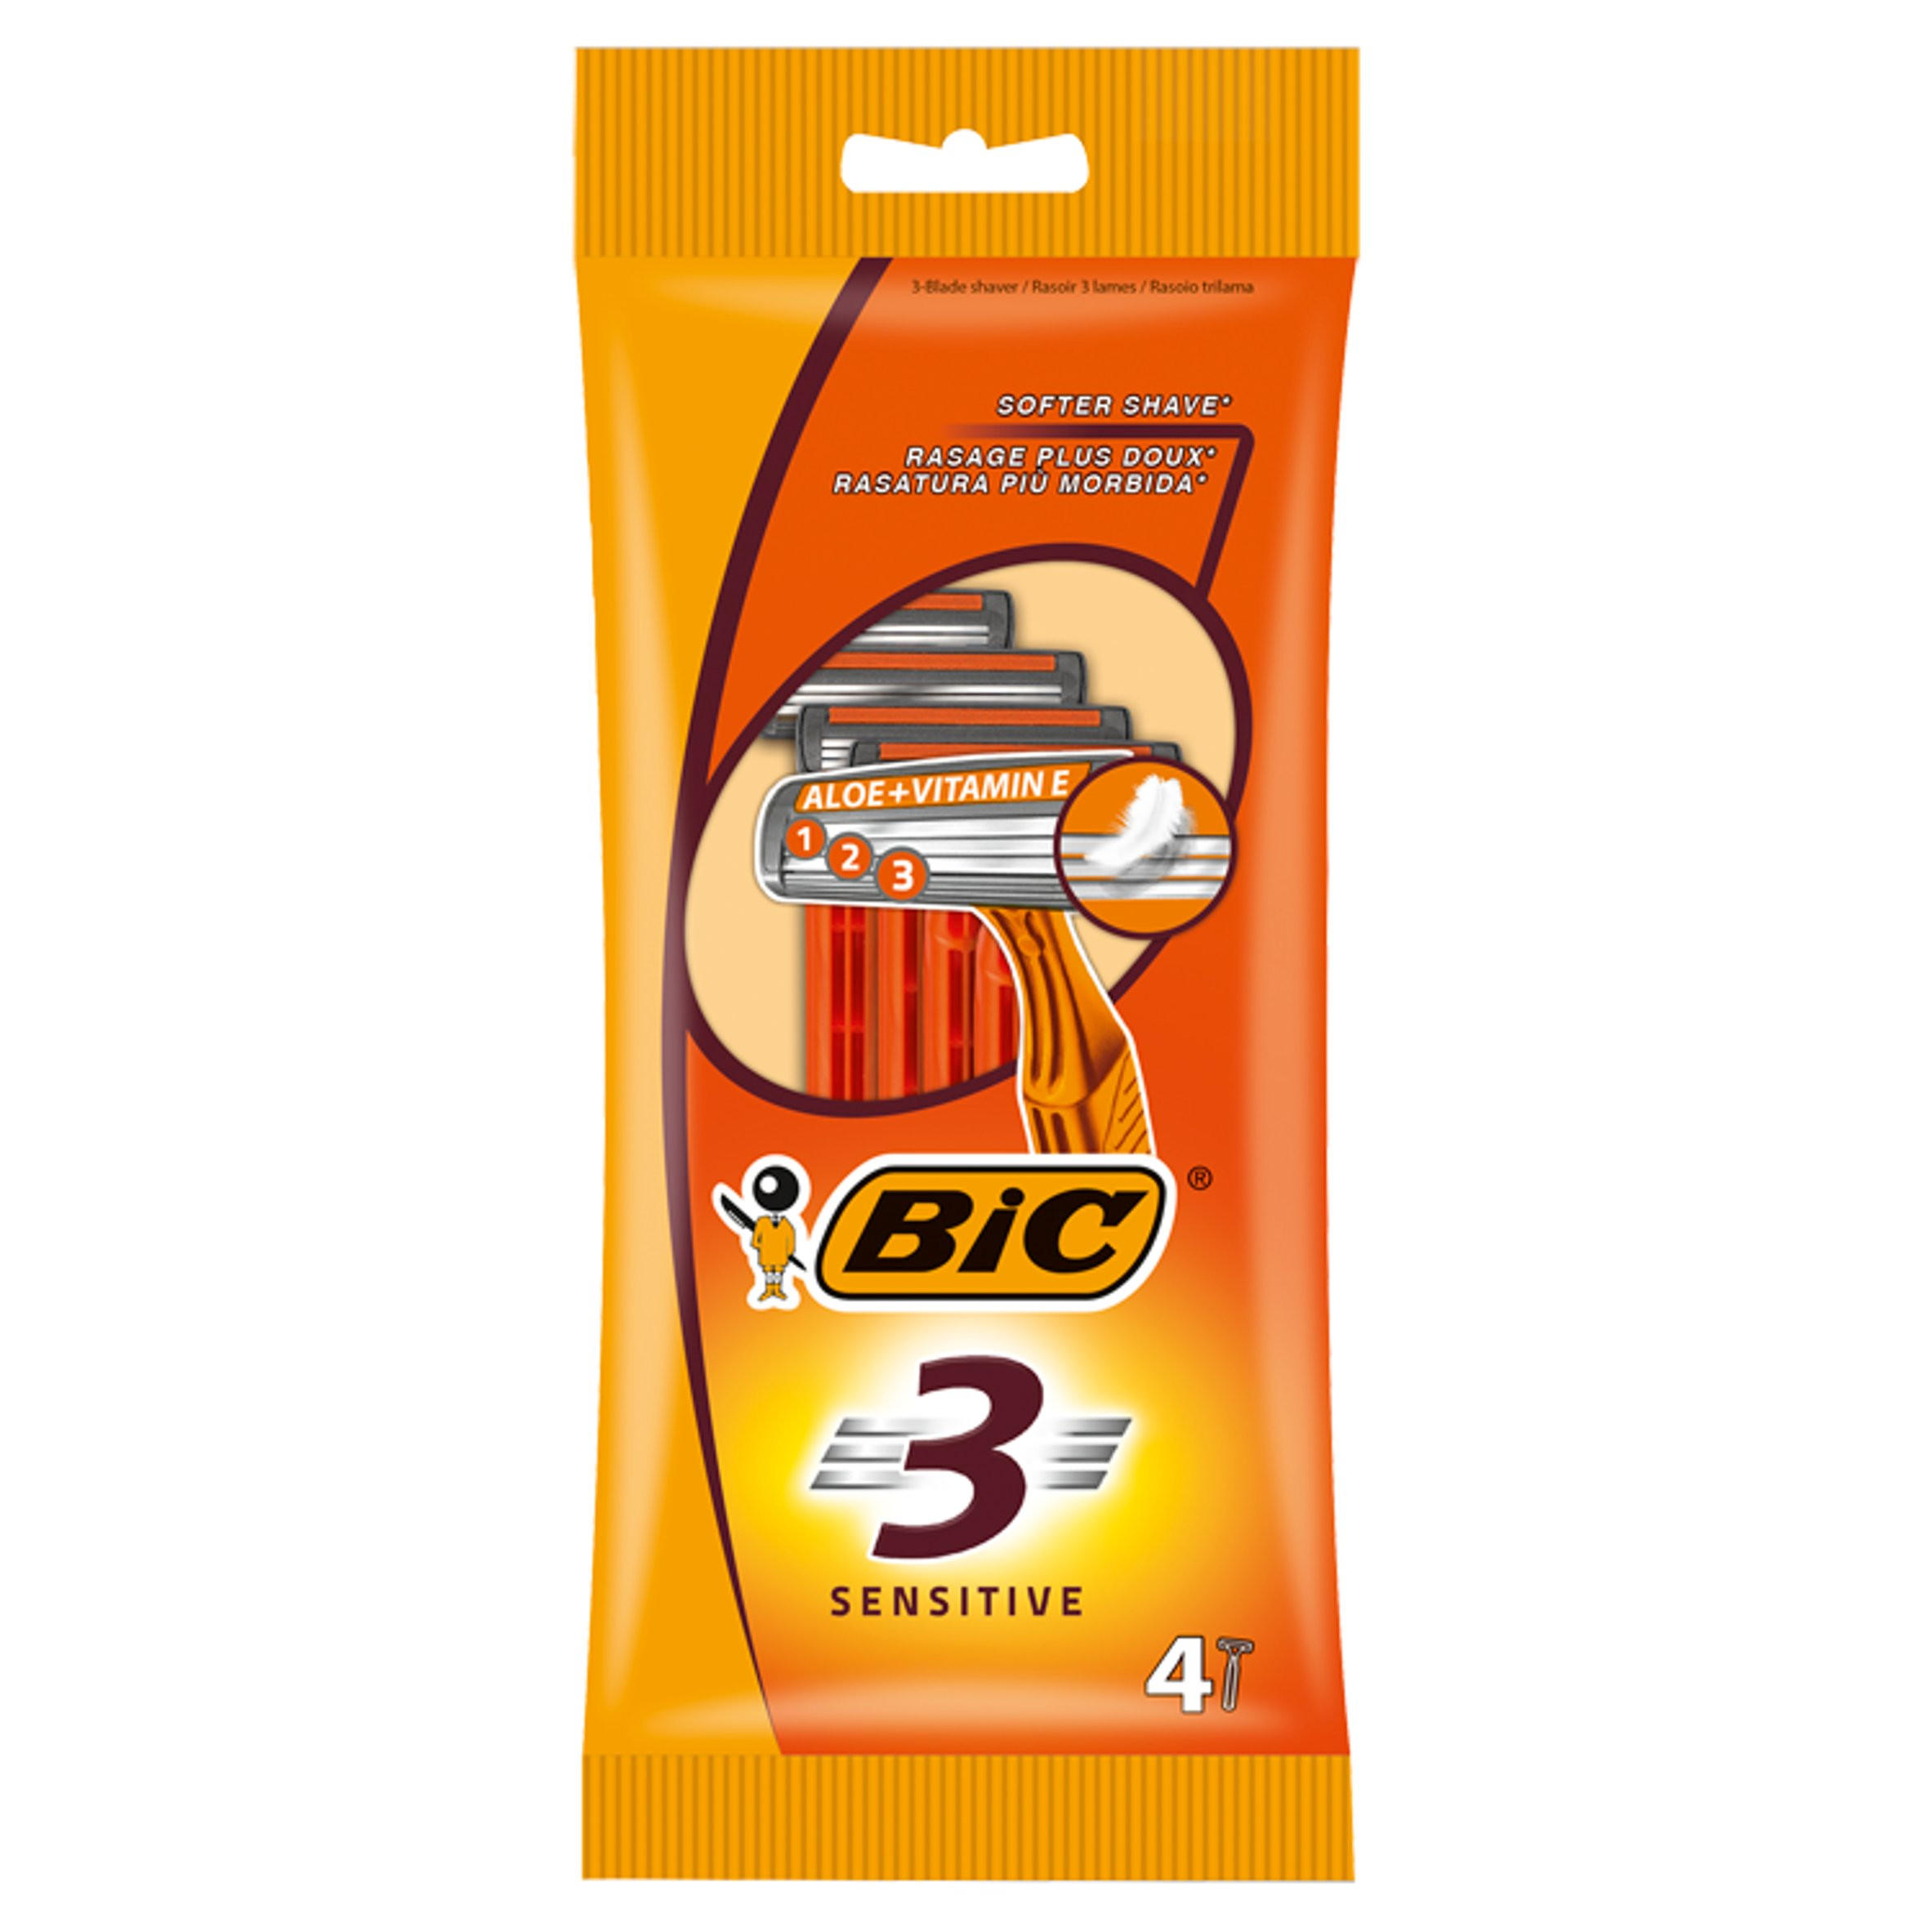 bic-3-sensitive-men-s-razors-pack-of-4-mens-toiletries-iceland-foods